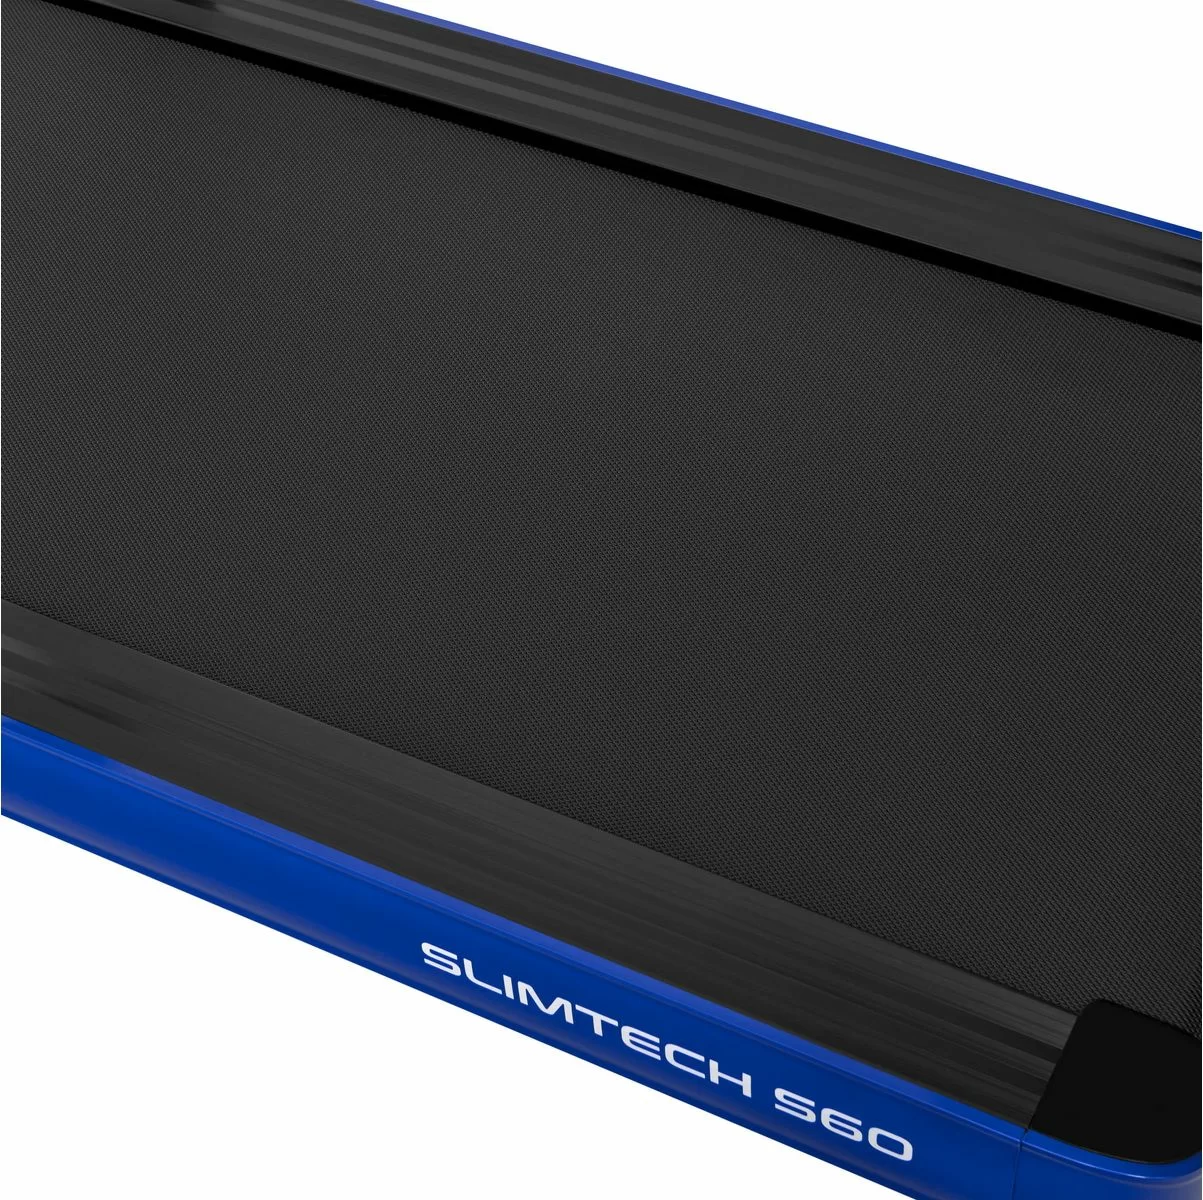 Фото Беговая дорожка Titanium Masters Slimtech S60, синяя со склада магазина СпортСЕ